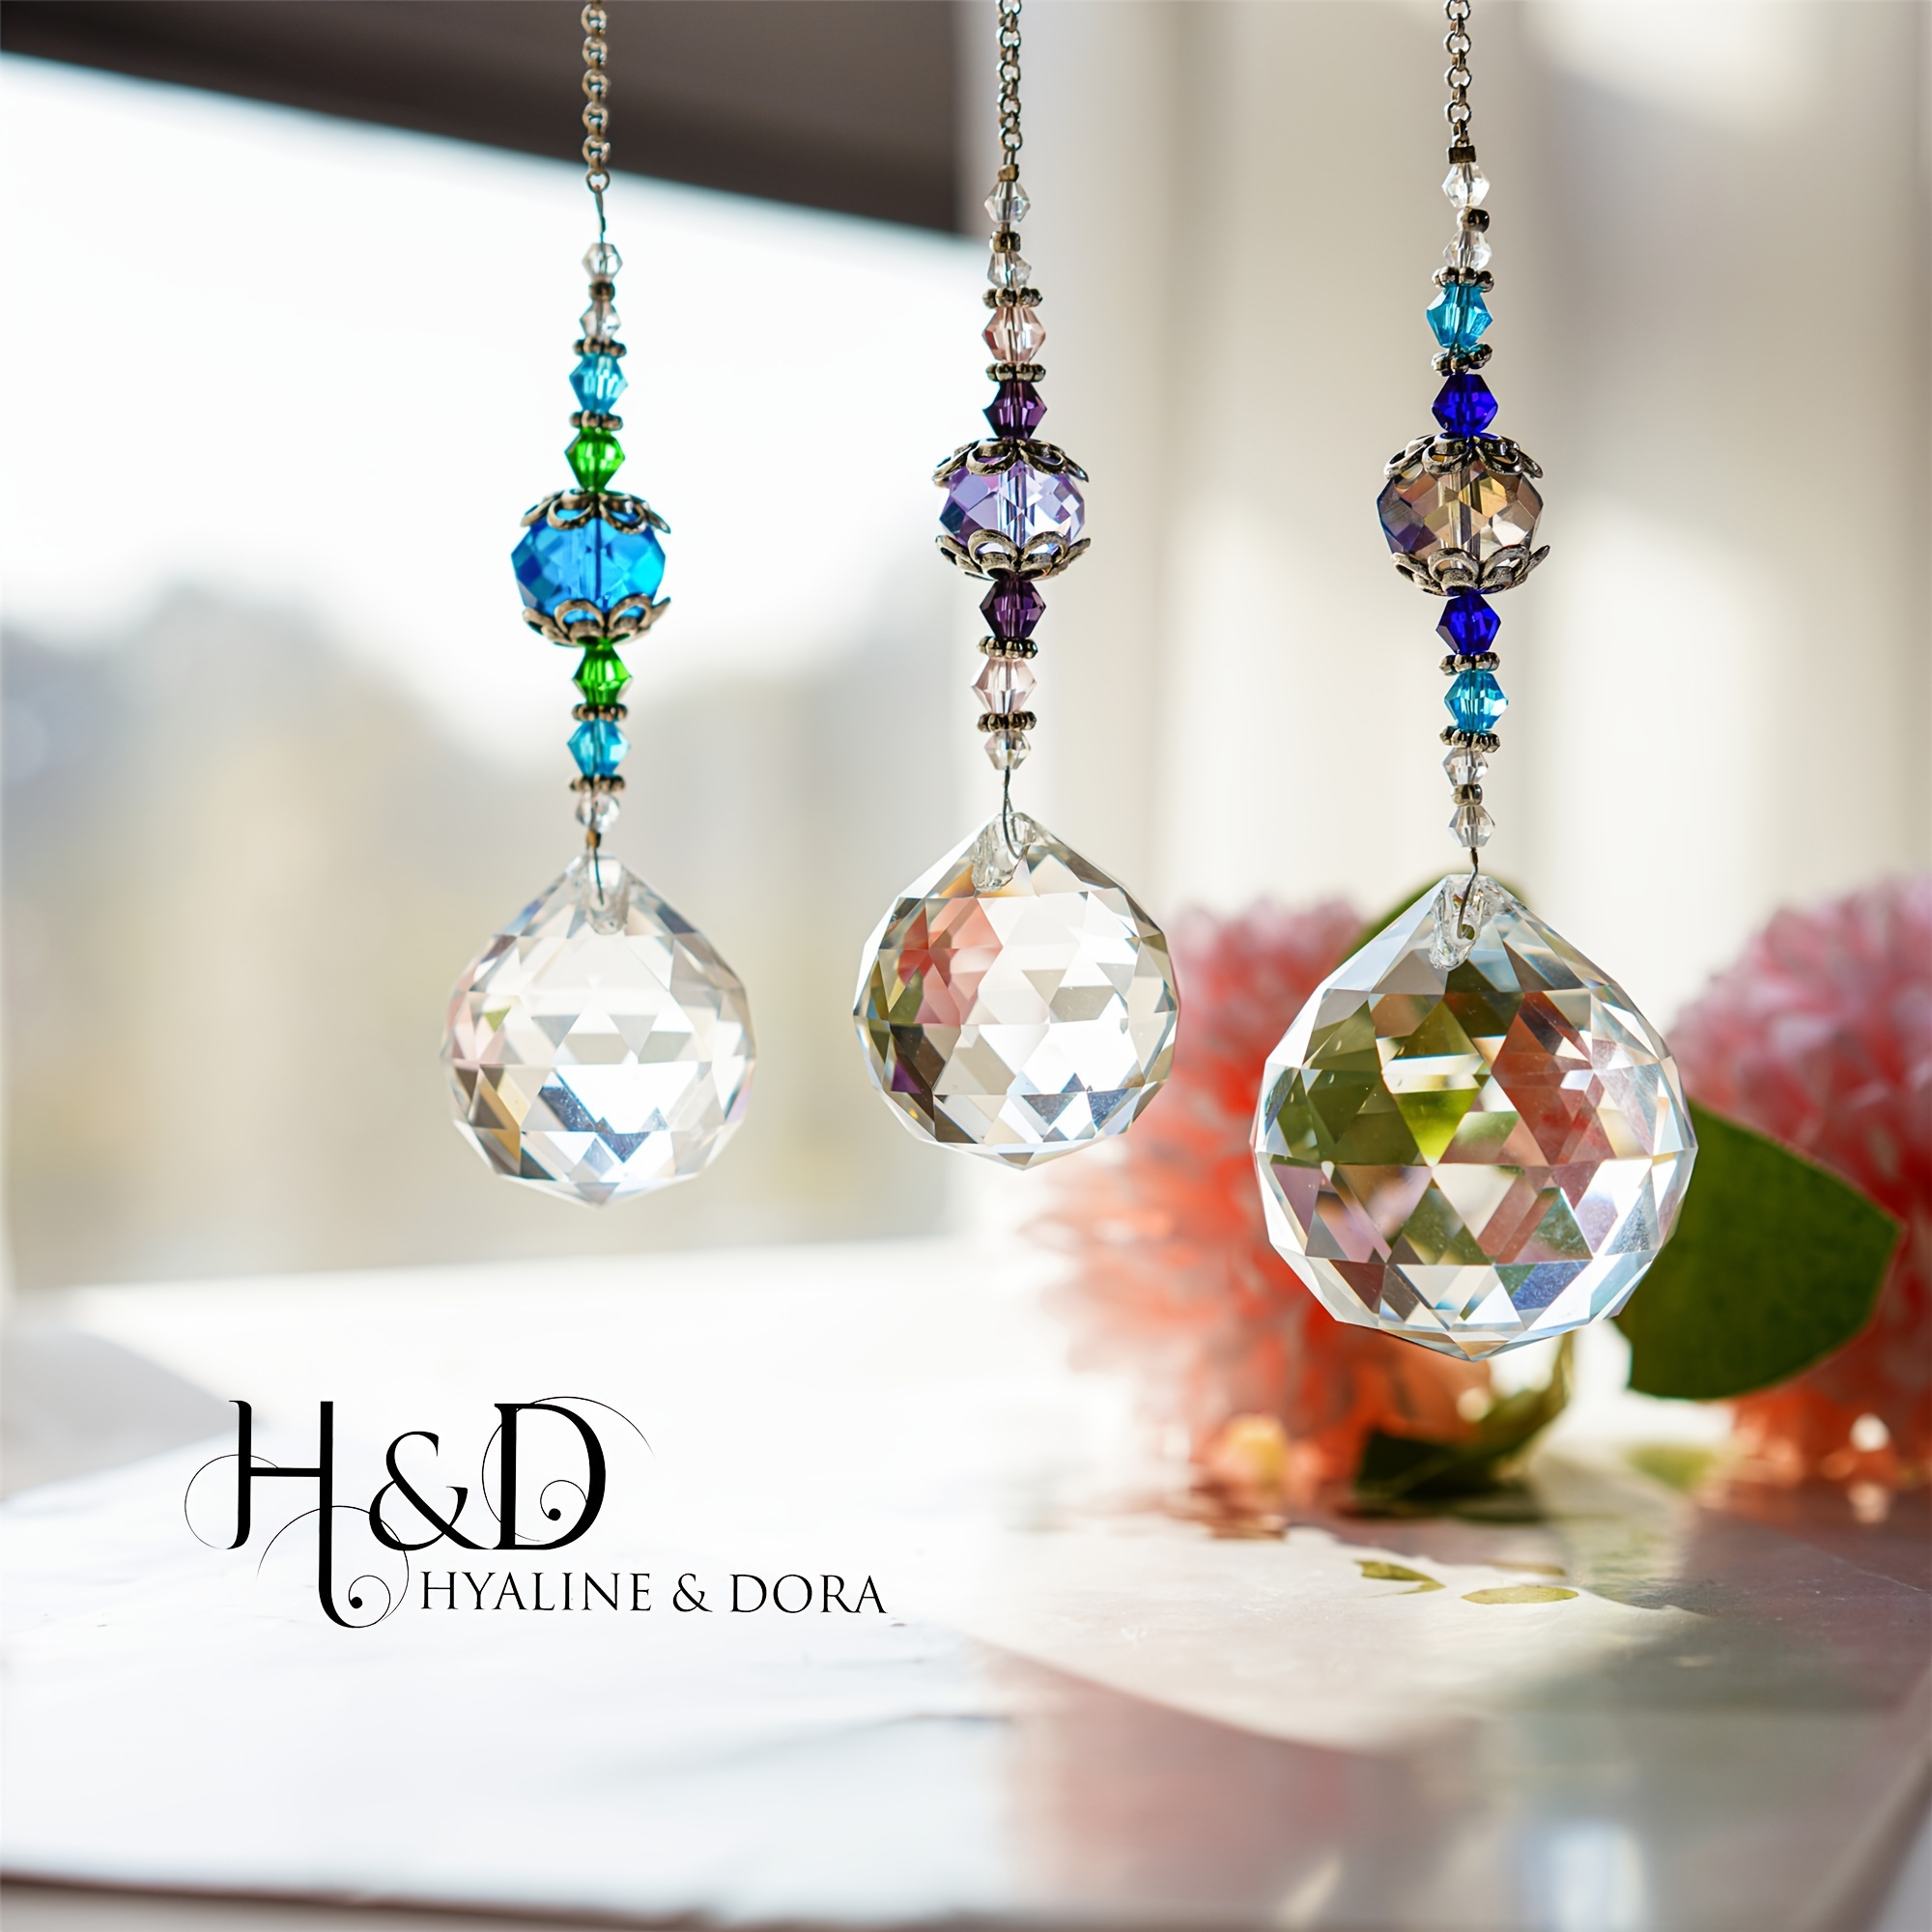 

3pcs Hanging Pendants Ornament Clear Crystal Prism Ball Rainbow Maker Window Prisms Suncatcher For Home Garden Decor